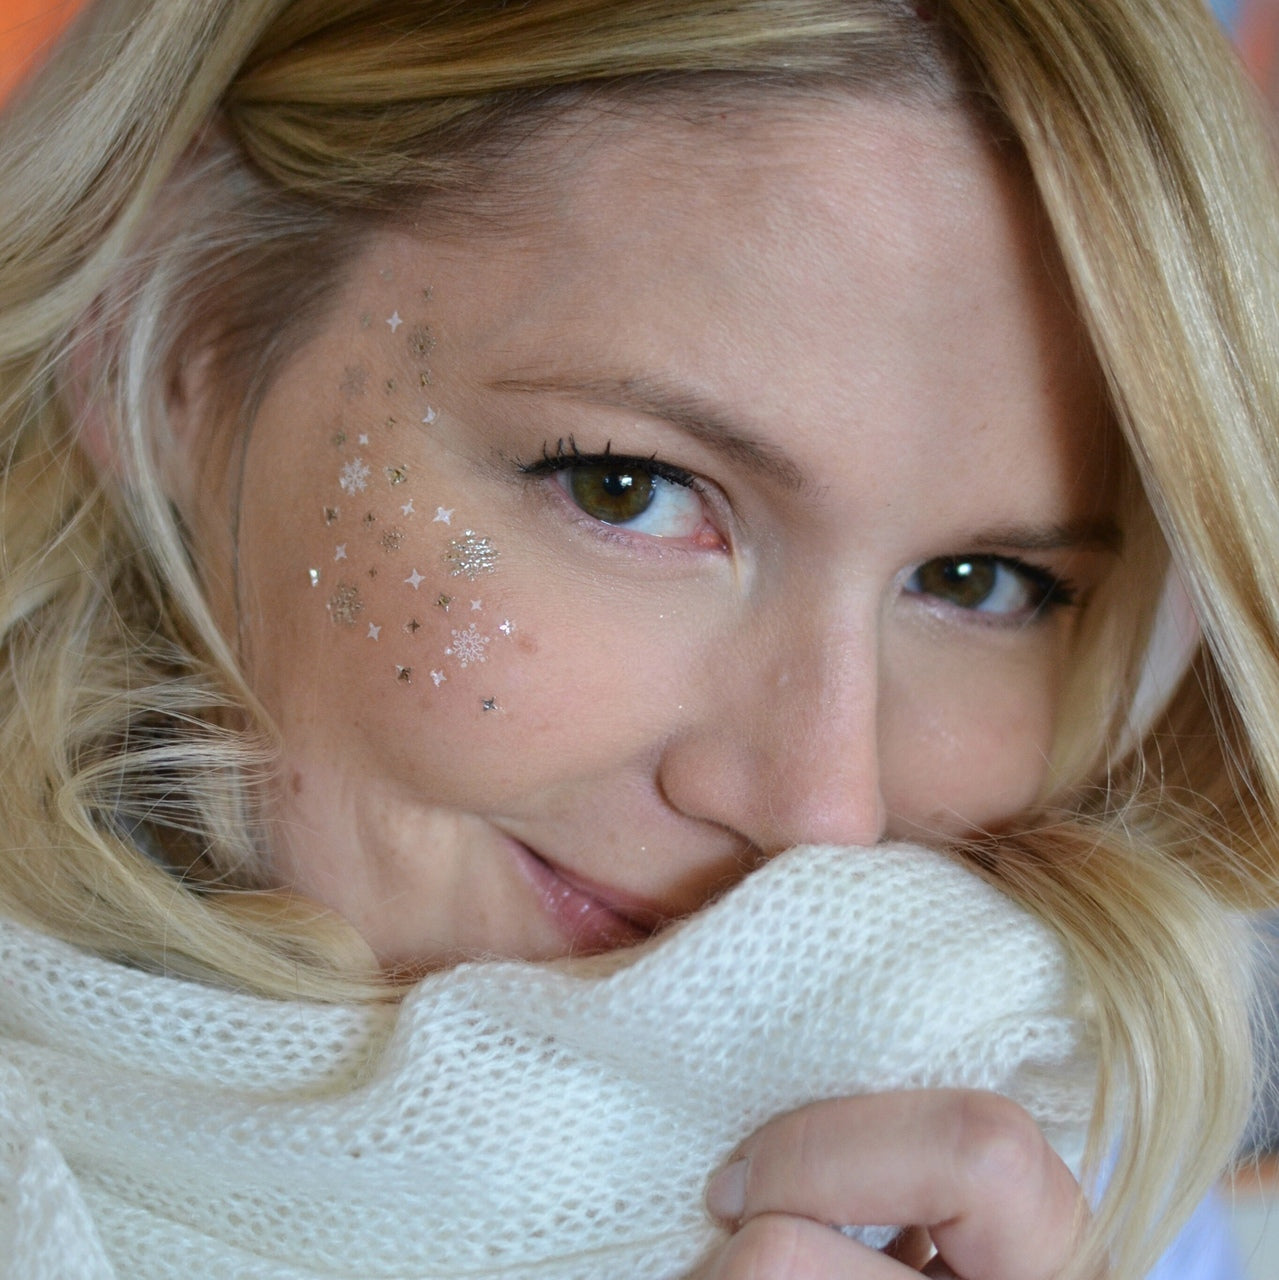 Adorn your eyes in the 'Snowflake Eye Jewel'. Festive winter sparkle! @FlashTattoos #FLASHTAT